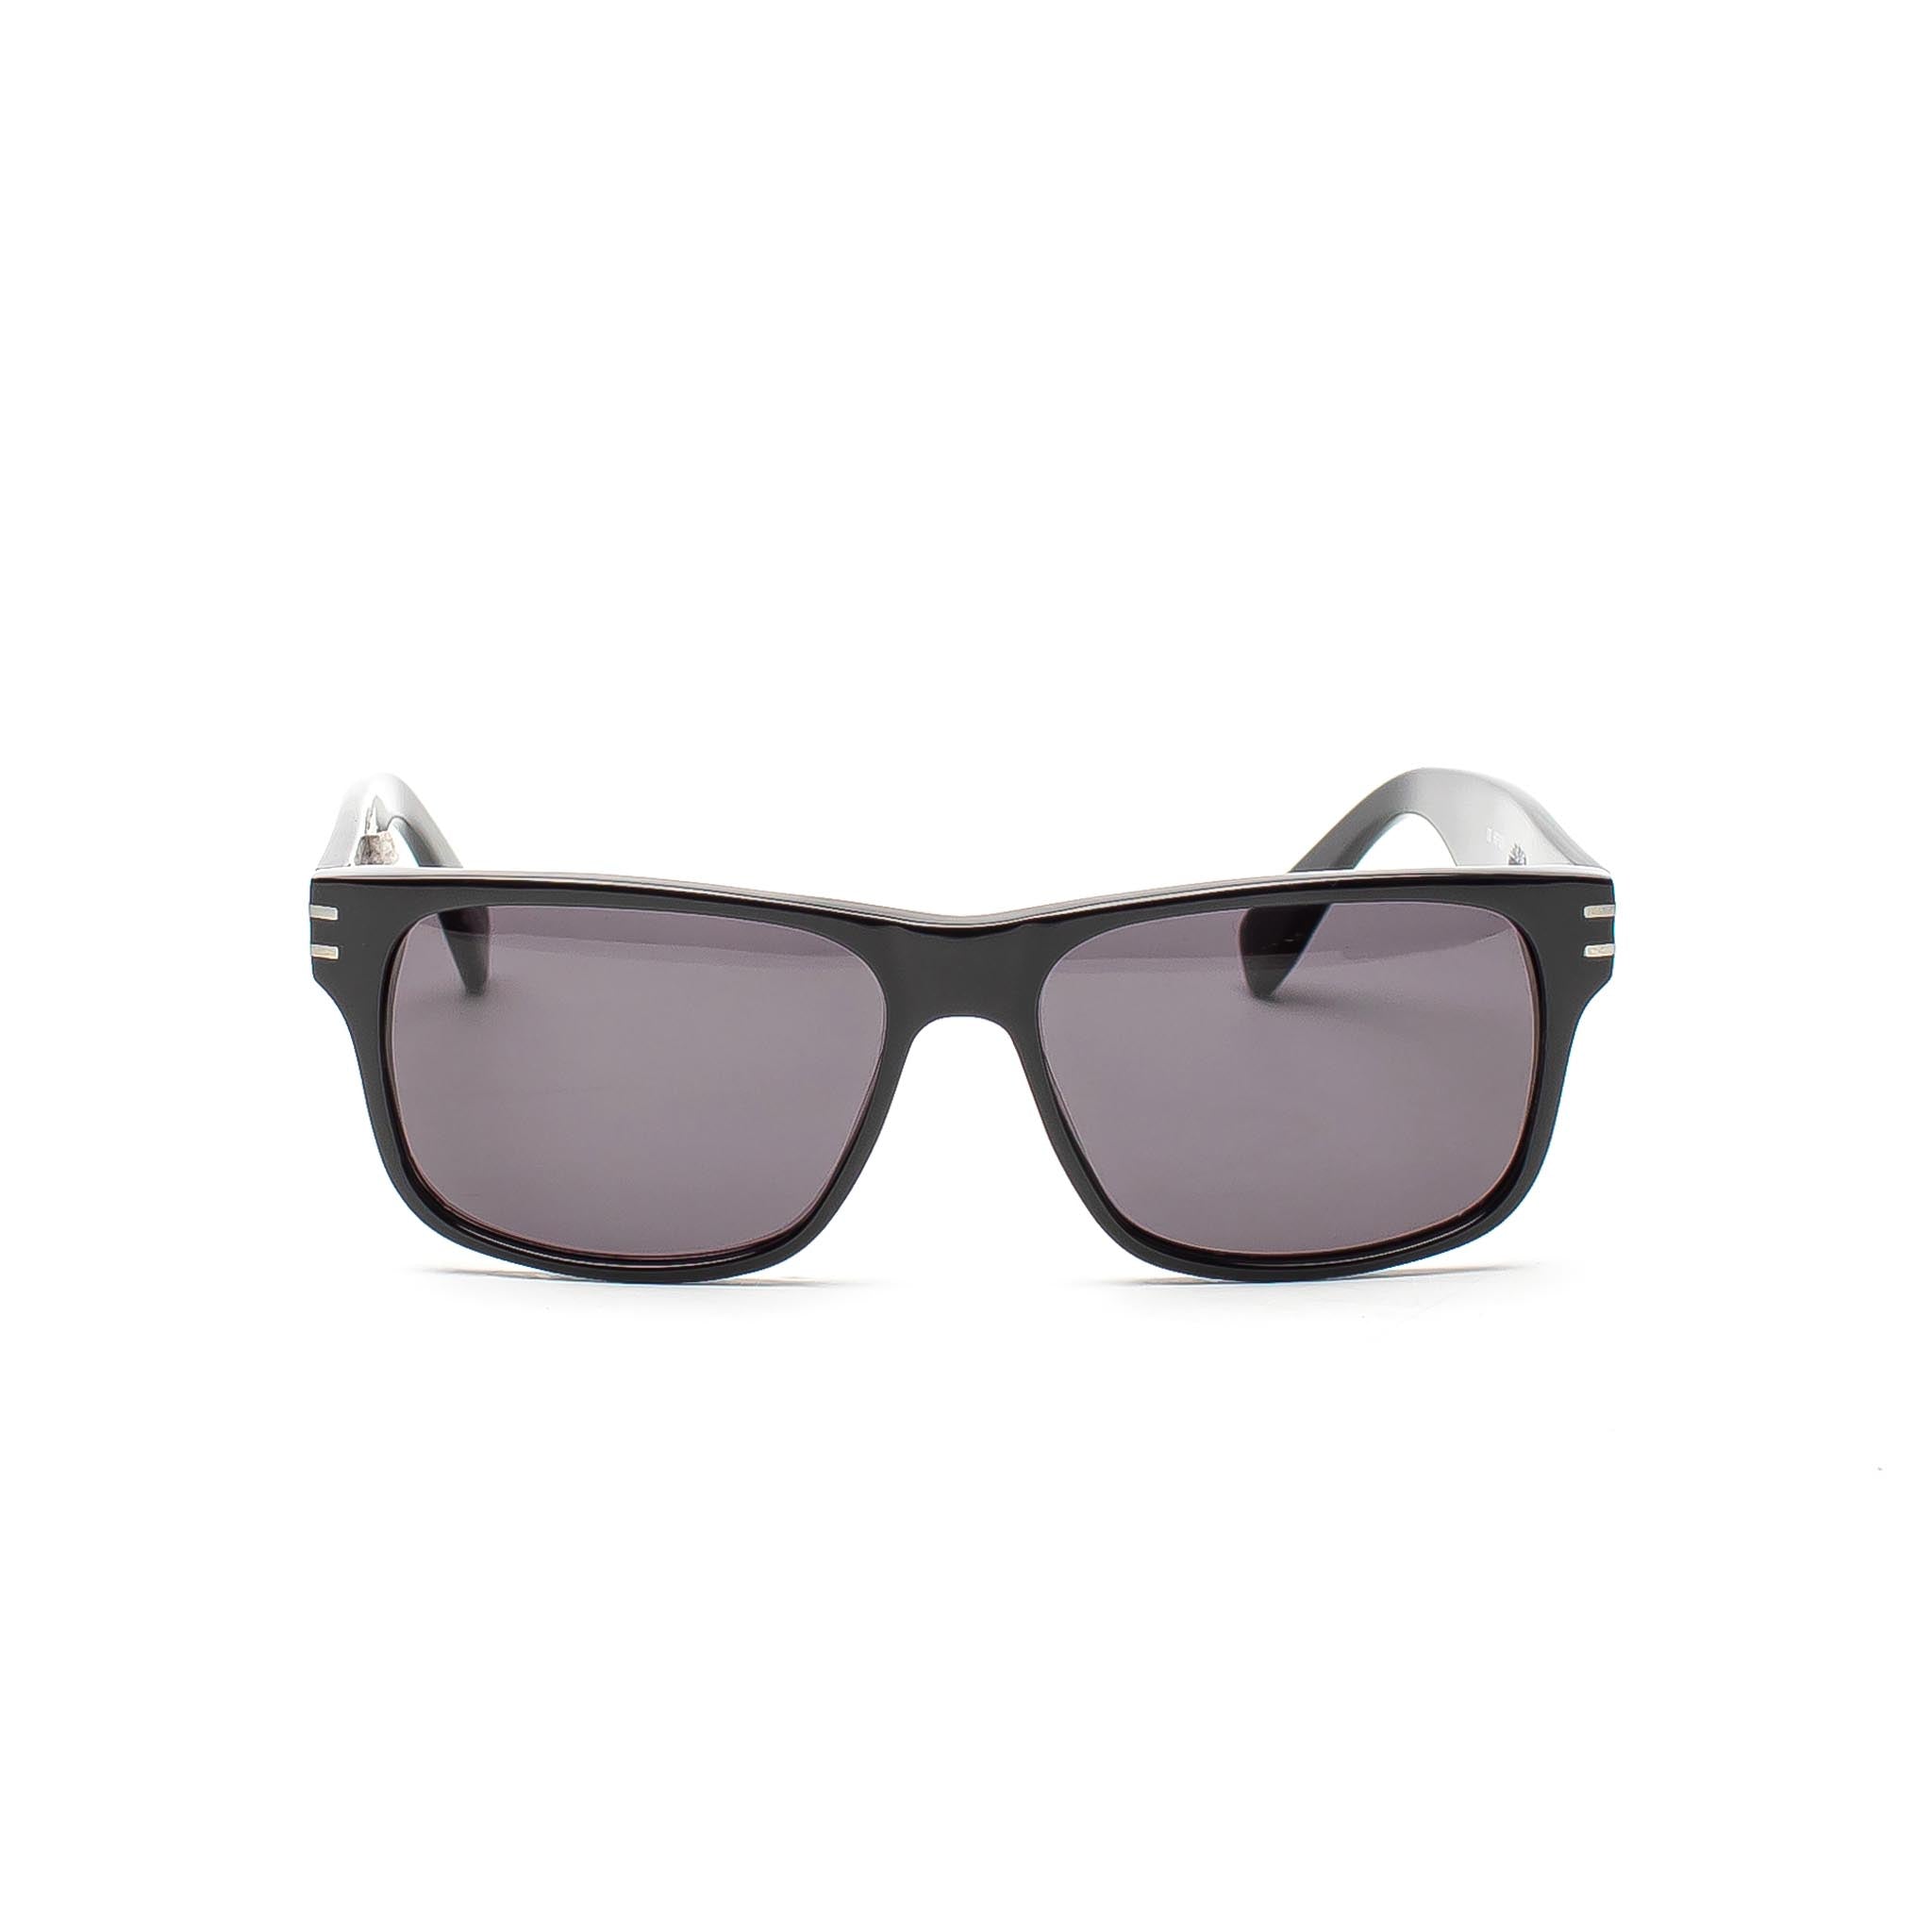 HOMME+ HP006 Sunglasses Black